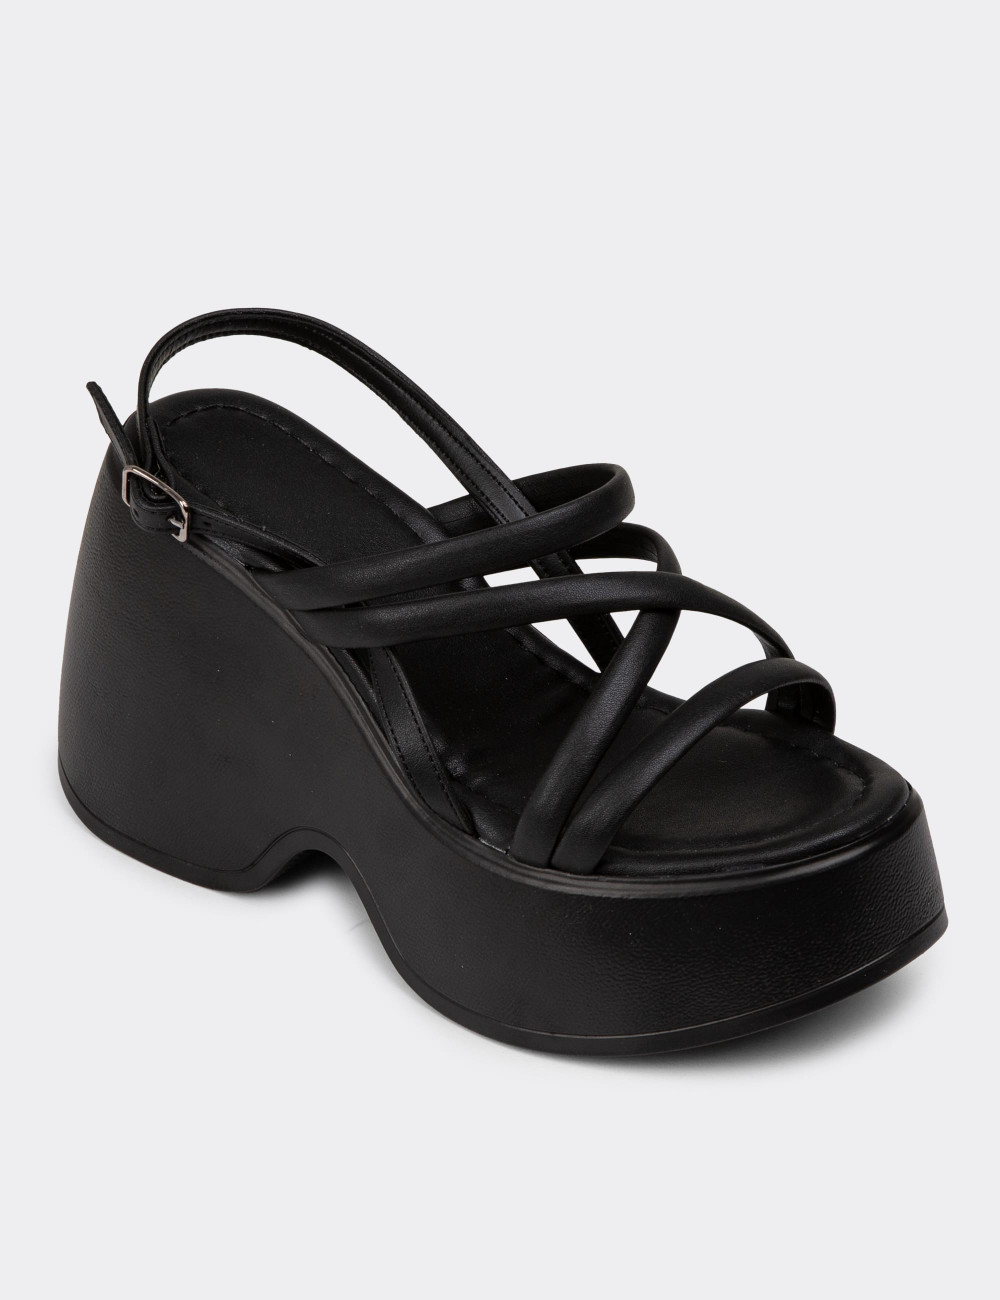 Siyah Kadın Platform Topuk Sandalet - DLG04ZSYHC01